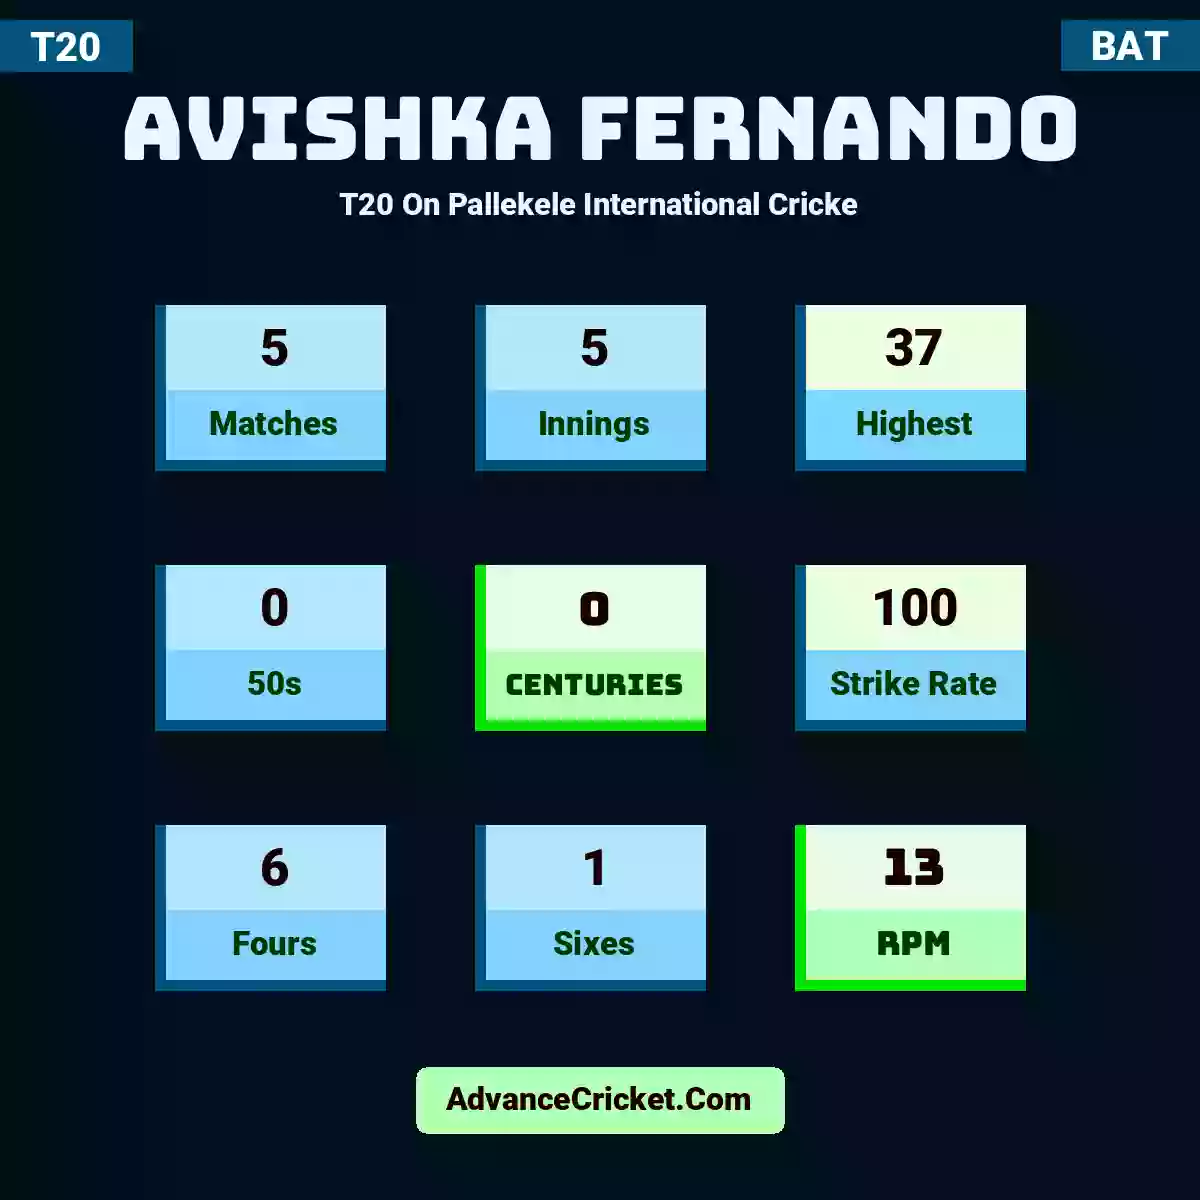 Avishka Fernando T20  On Pallekele International Cricke, Avishka Fernando played 5 matches, scored 37 runs as highest, 0 half-centuries, and 0 centuries, with a strike rate of 100. A.Fernando hit 6 fours and 1 sixes, with an RPM of 13.